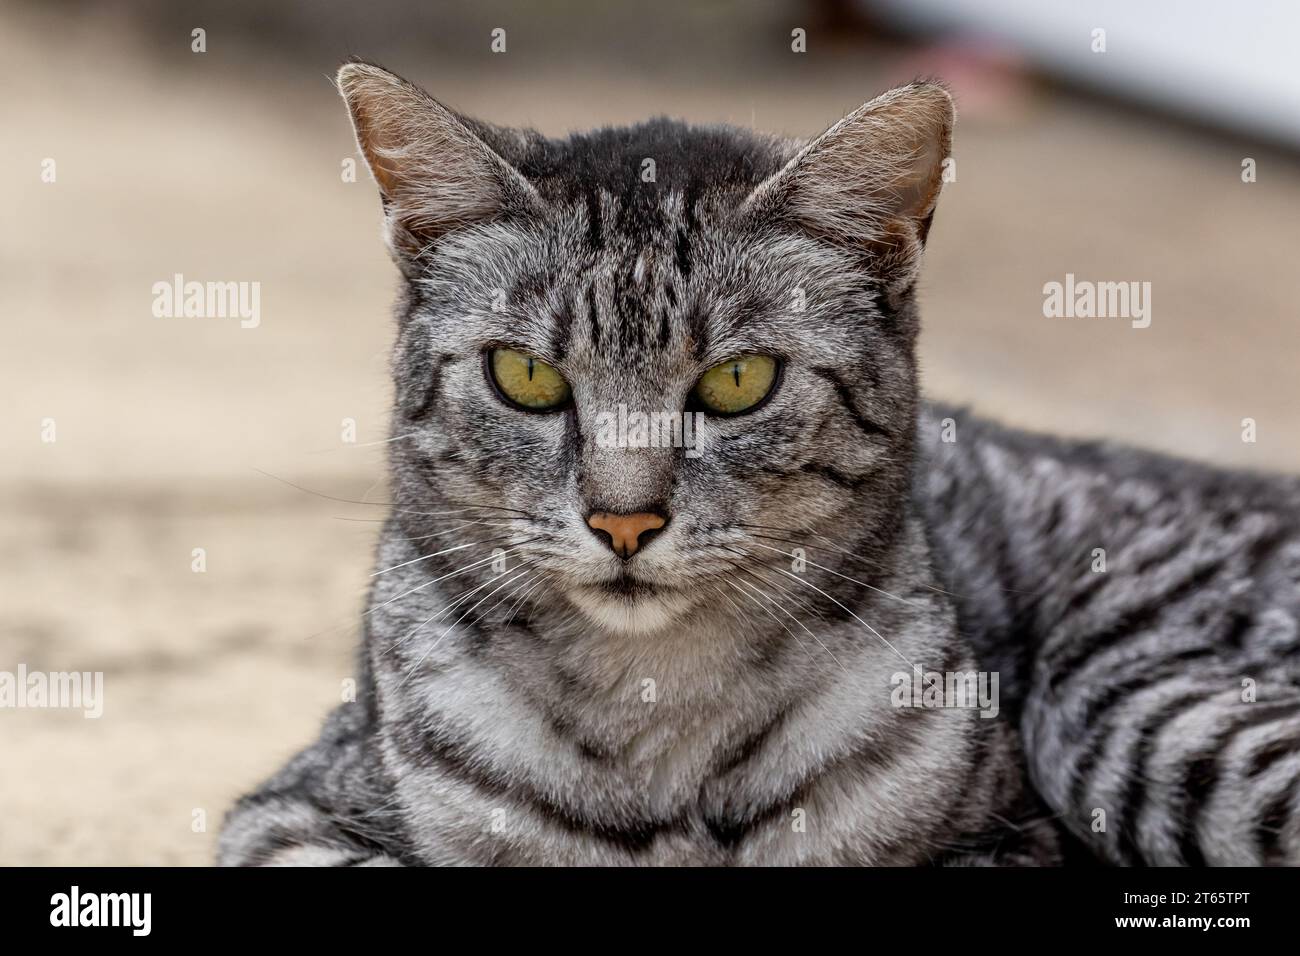 An Egyptian Mau Cat close-up. Stock Photo